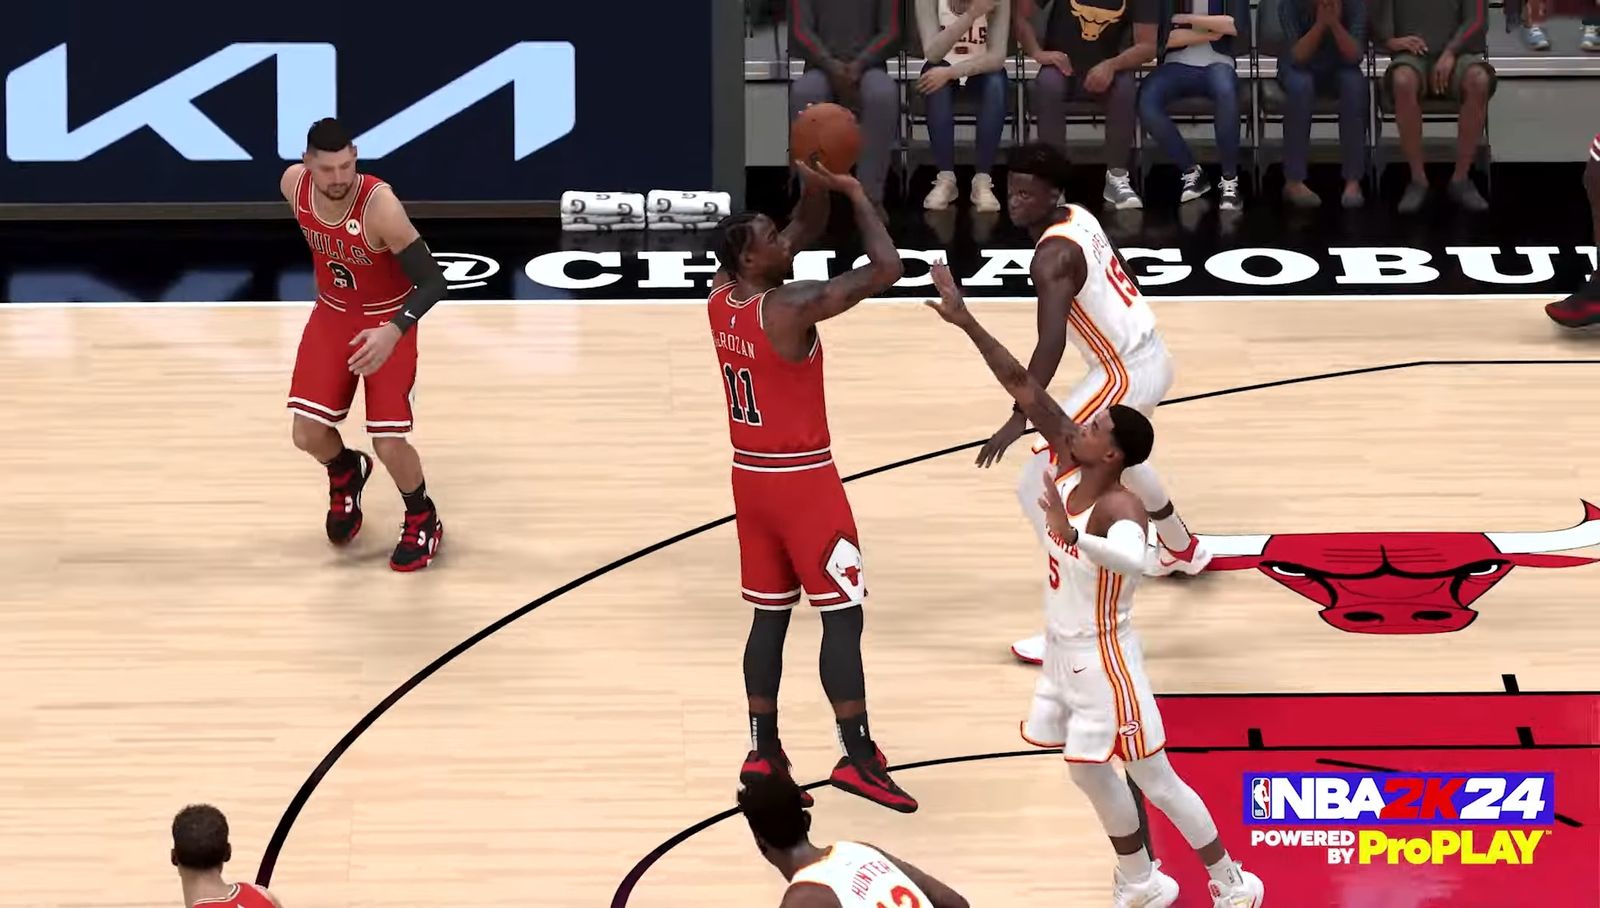 NBA 2K24 gameplay footage